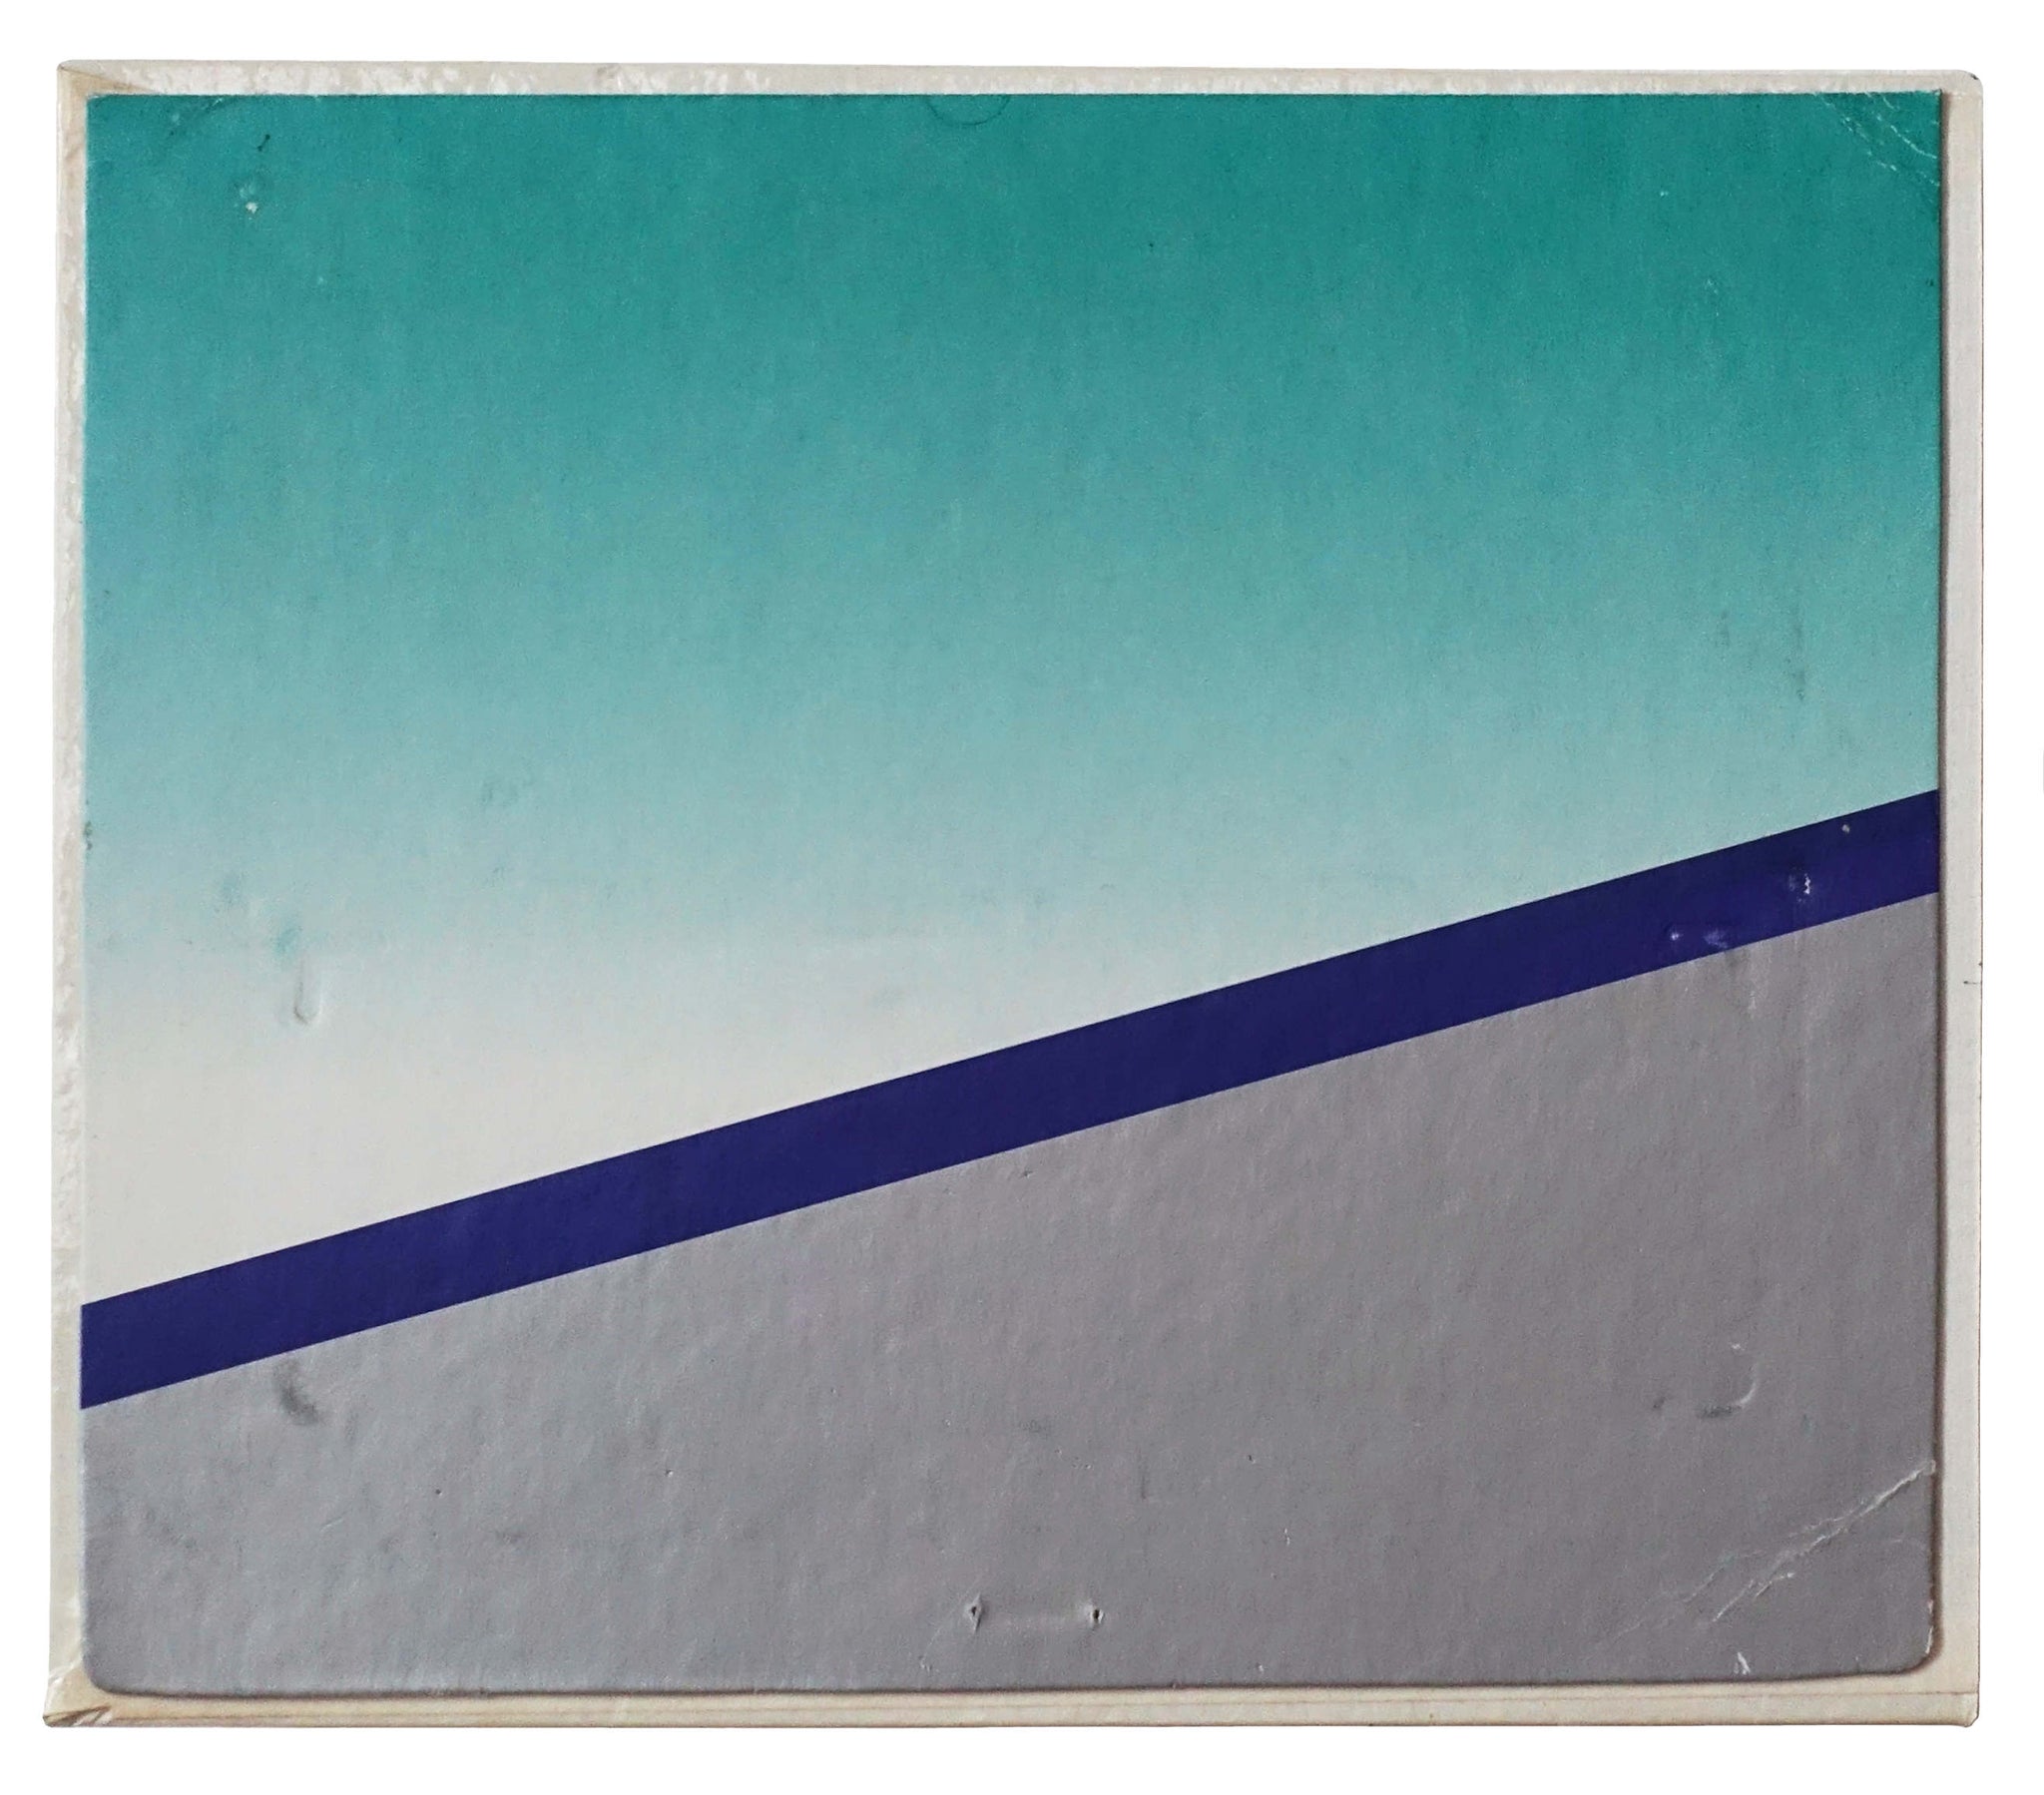 Hendrik Krawen, o.T., 2017, Found edited print, Cardboard, 16,5 x 19 cm